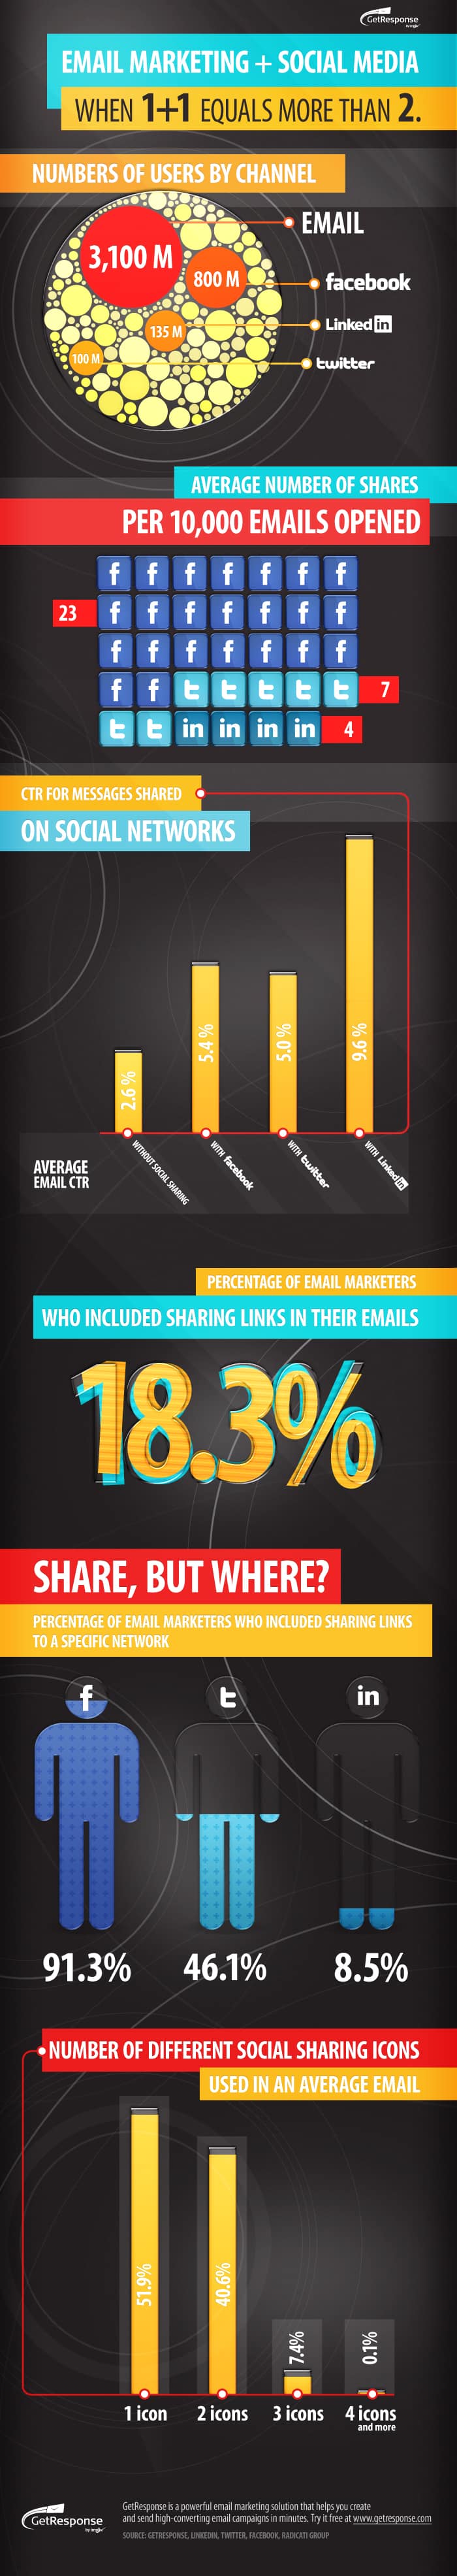 infographic_socialmedia_emailmarketing